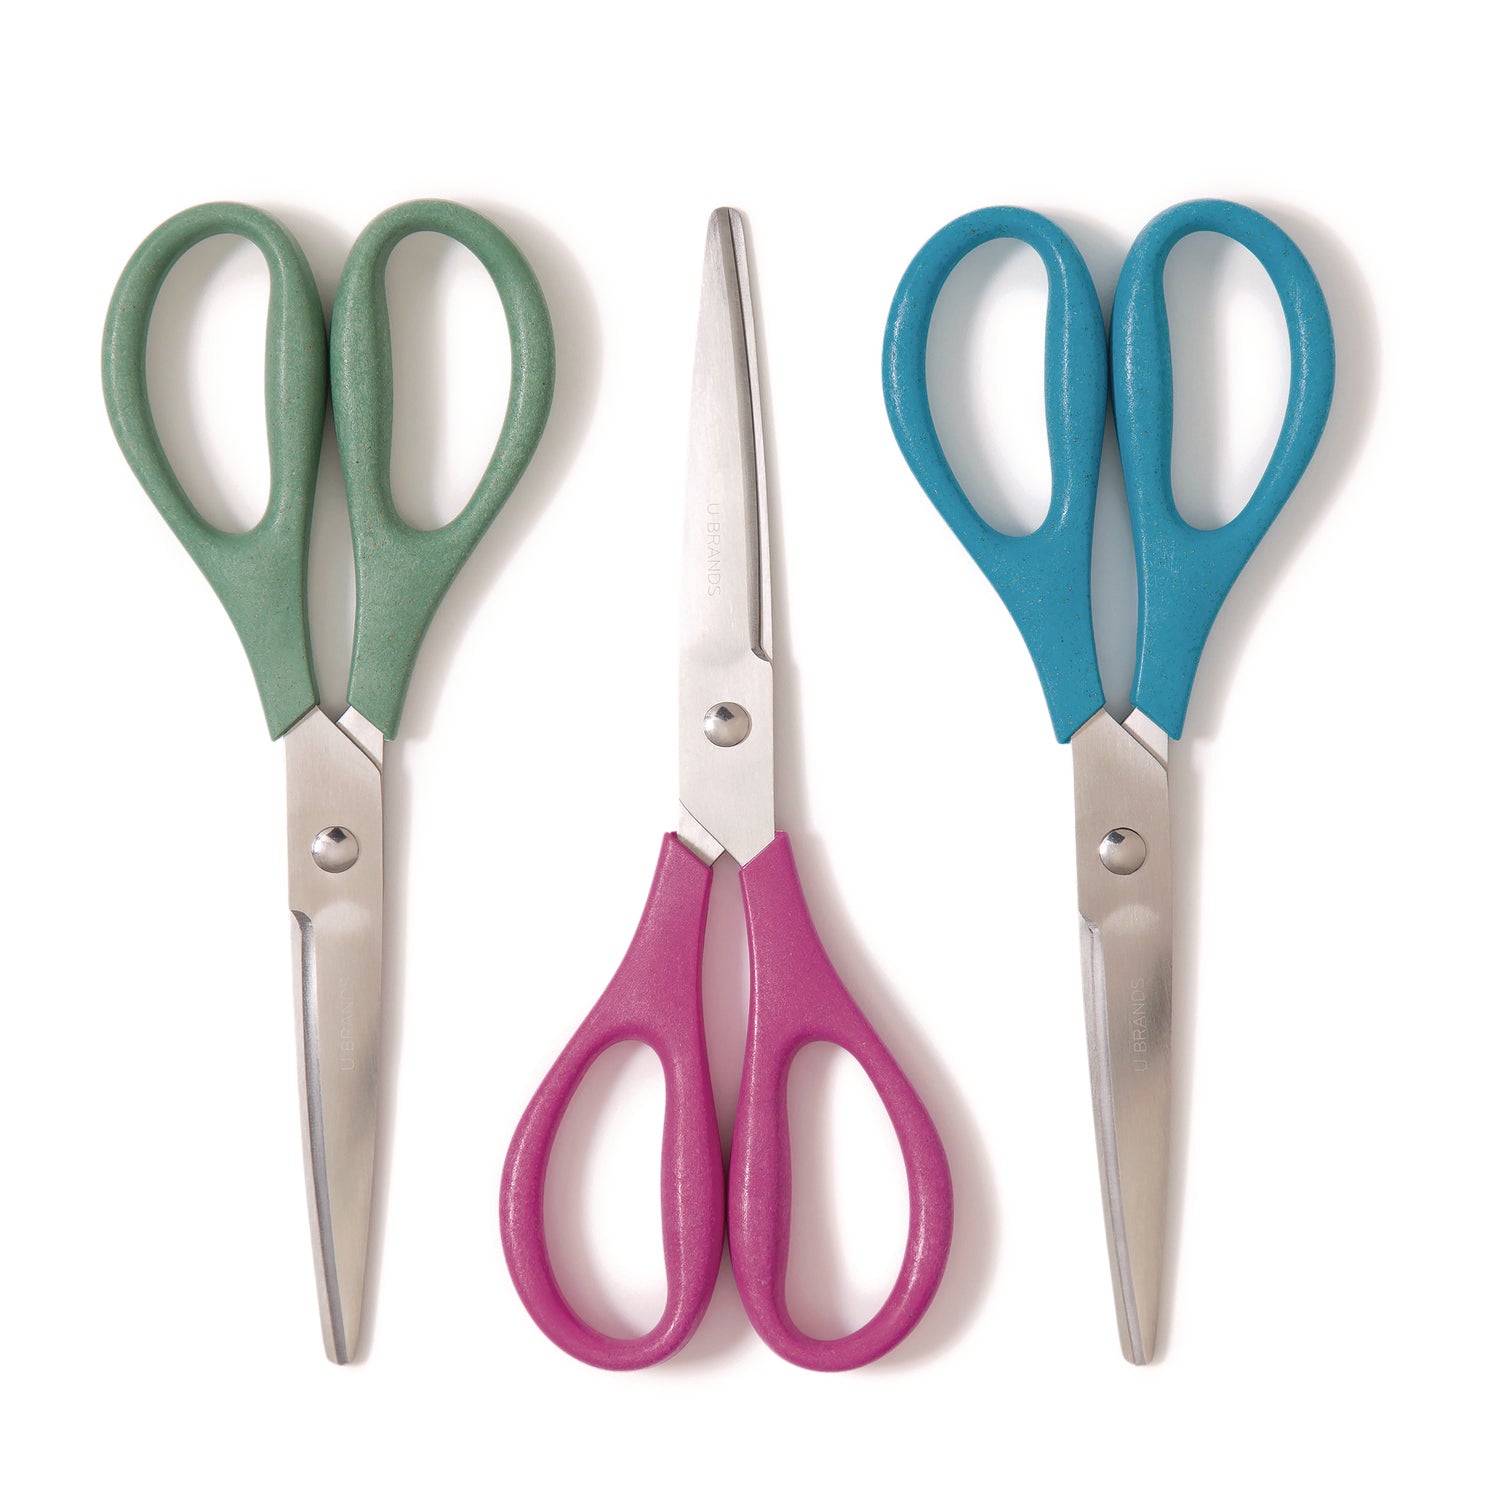 u-eco-scissors-concave-tip-945-long-3-cut-length-assorted-straight-handle-3-pack_ubr6607u0124 - 1